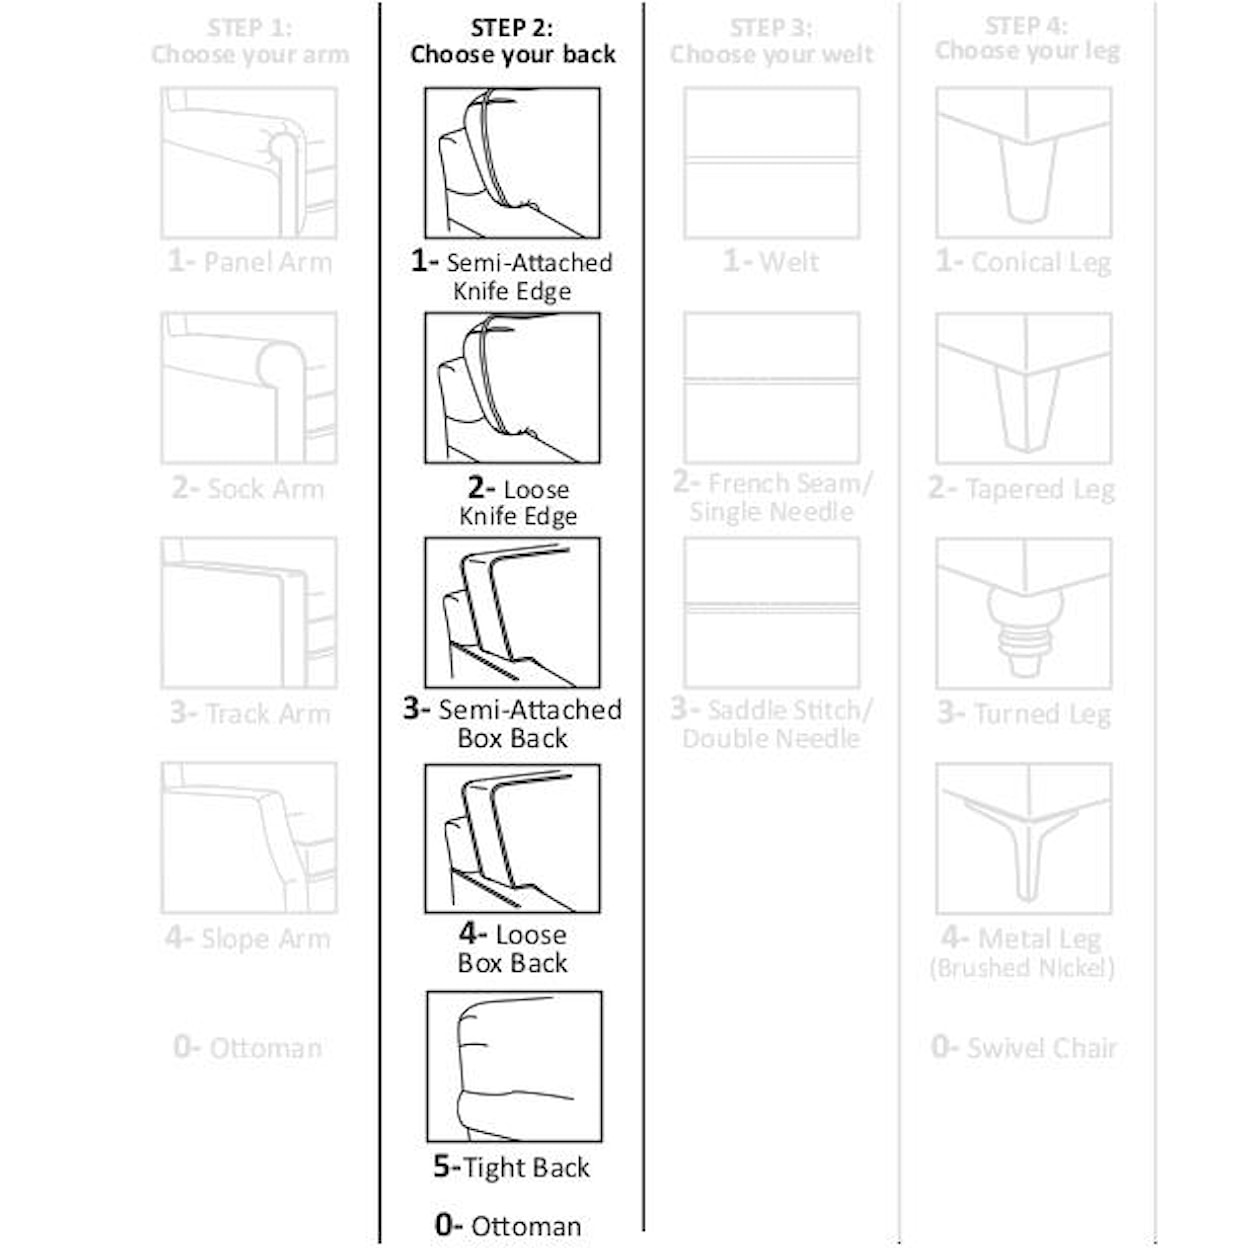 Craftmaster M9 Custom - Design Options Accent Chair